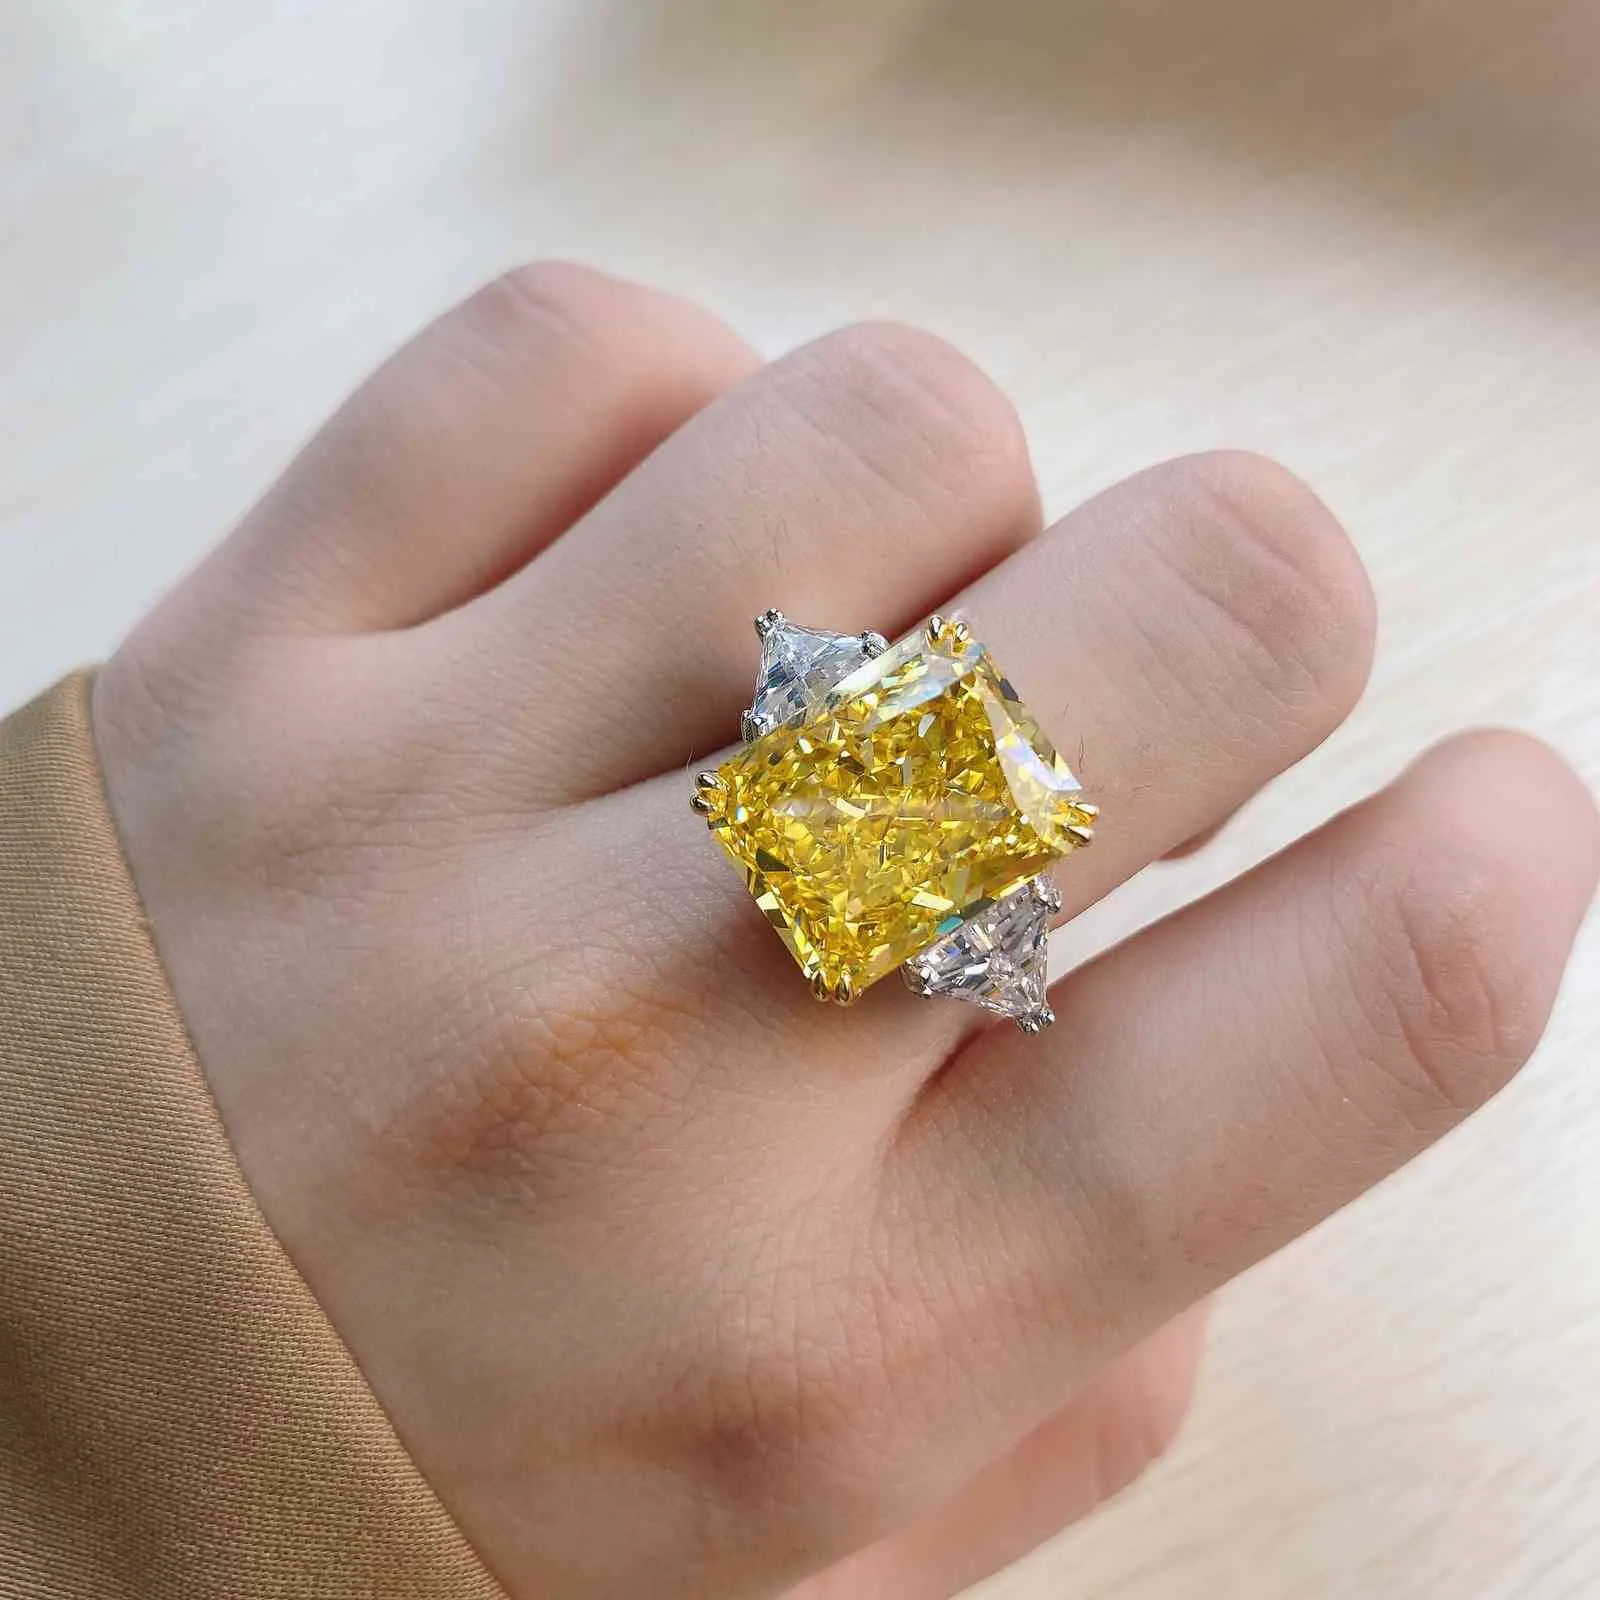 HIBRIDE Luxe Sparking 100% 925 Sterling Silver Yellow Diamond Femmes Anneaux De Mariée Cadeaux De Fête De Mariage Fine Jewelry Bijoux R-273